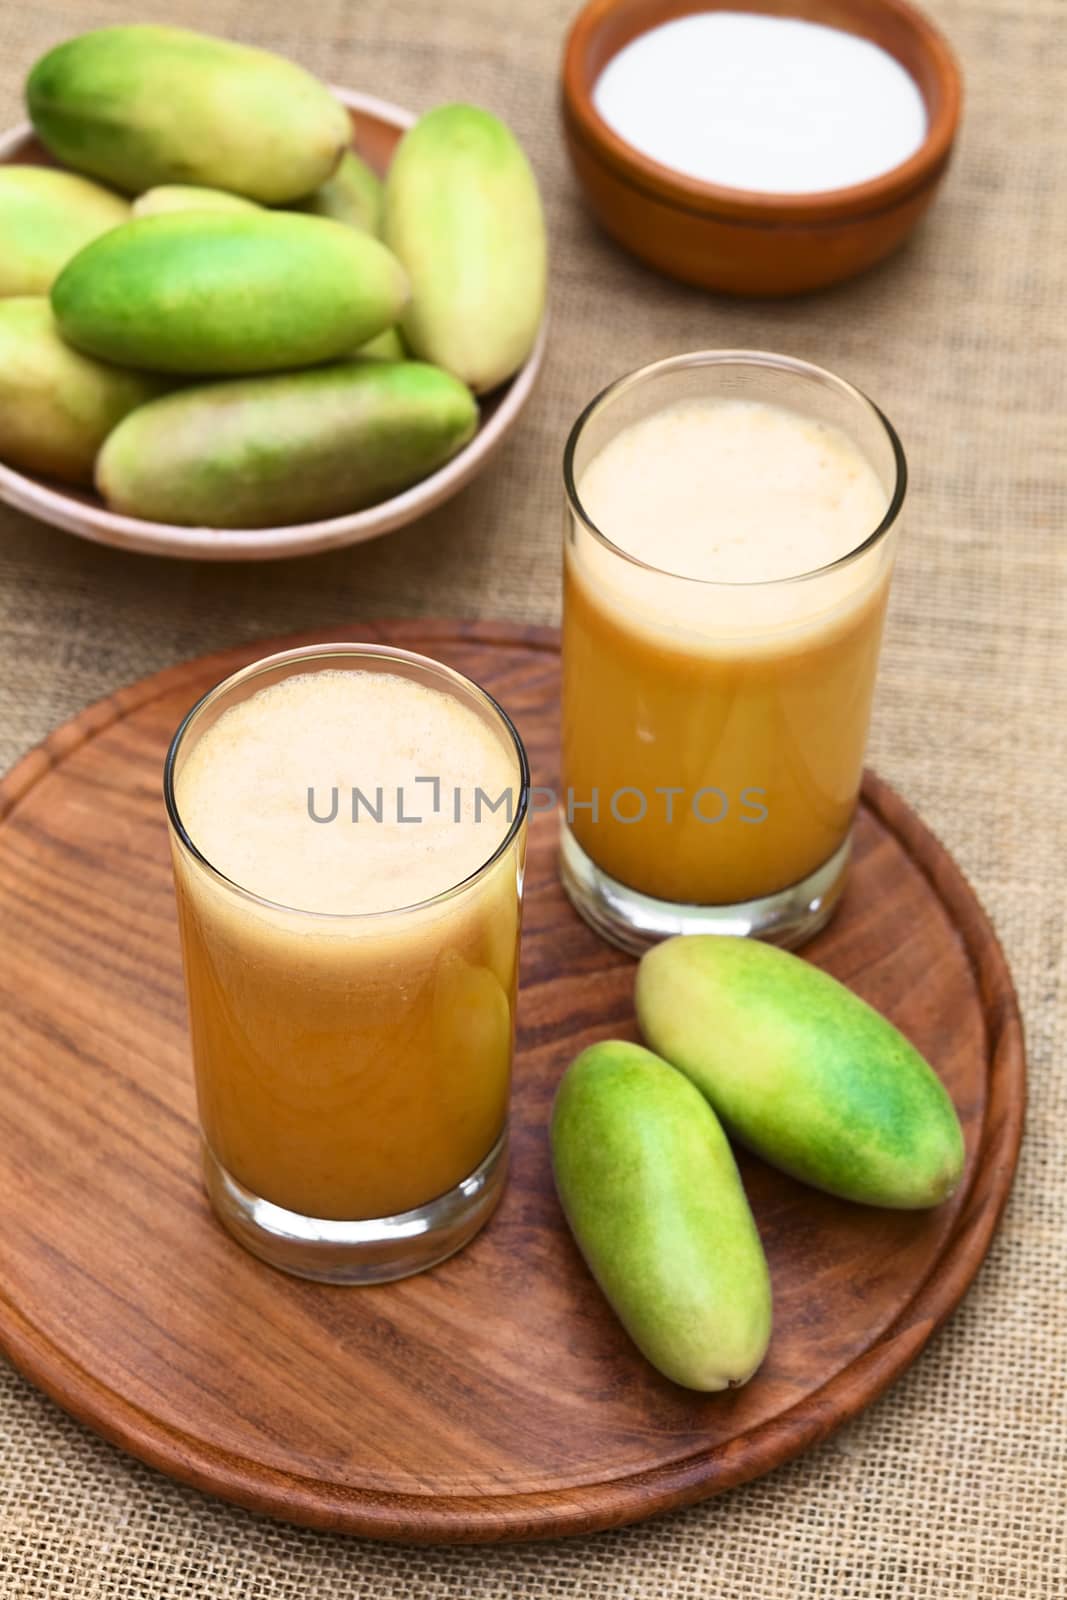 Fresh Juice Made of Banana Passionfruit (lat. Passiflora Tripartita) by ildi